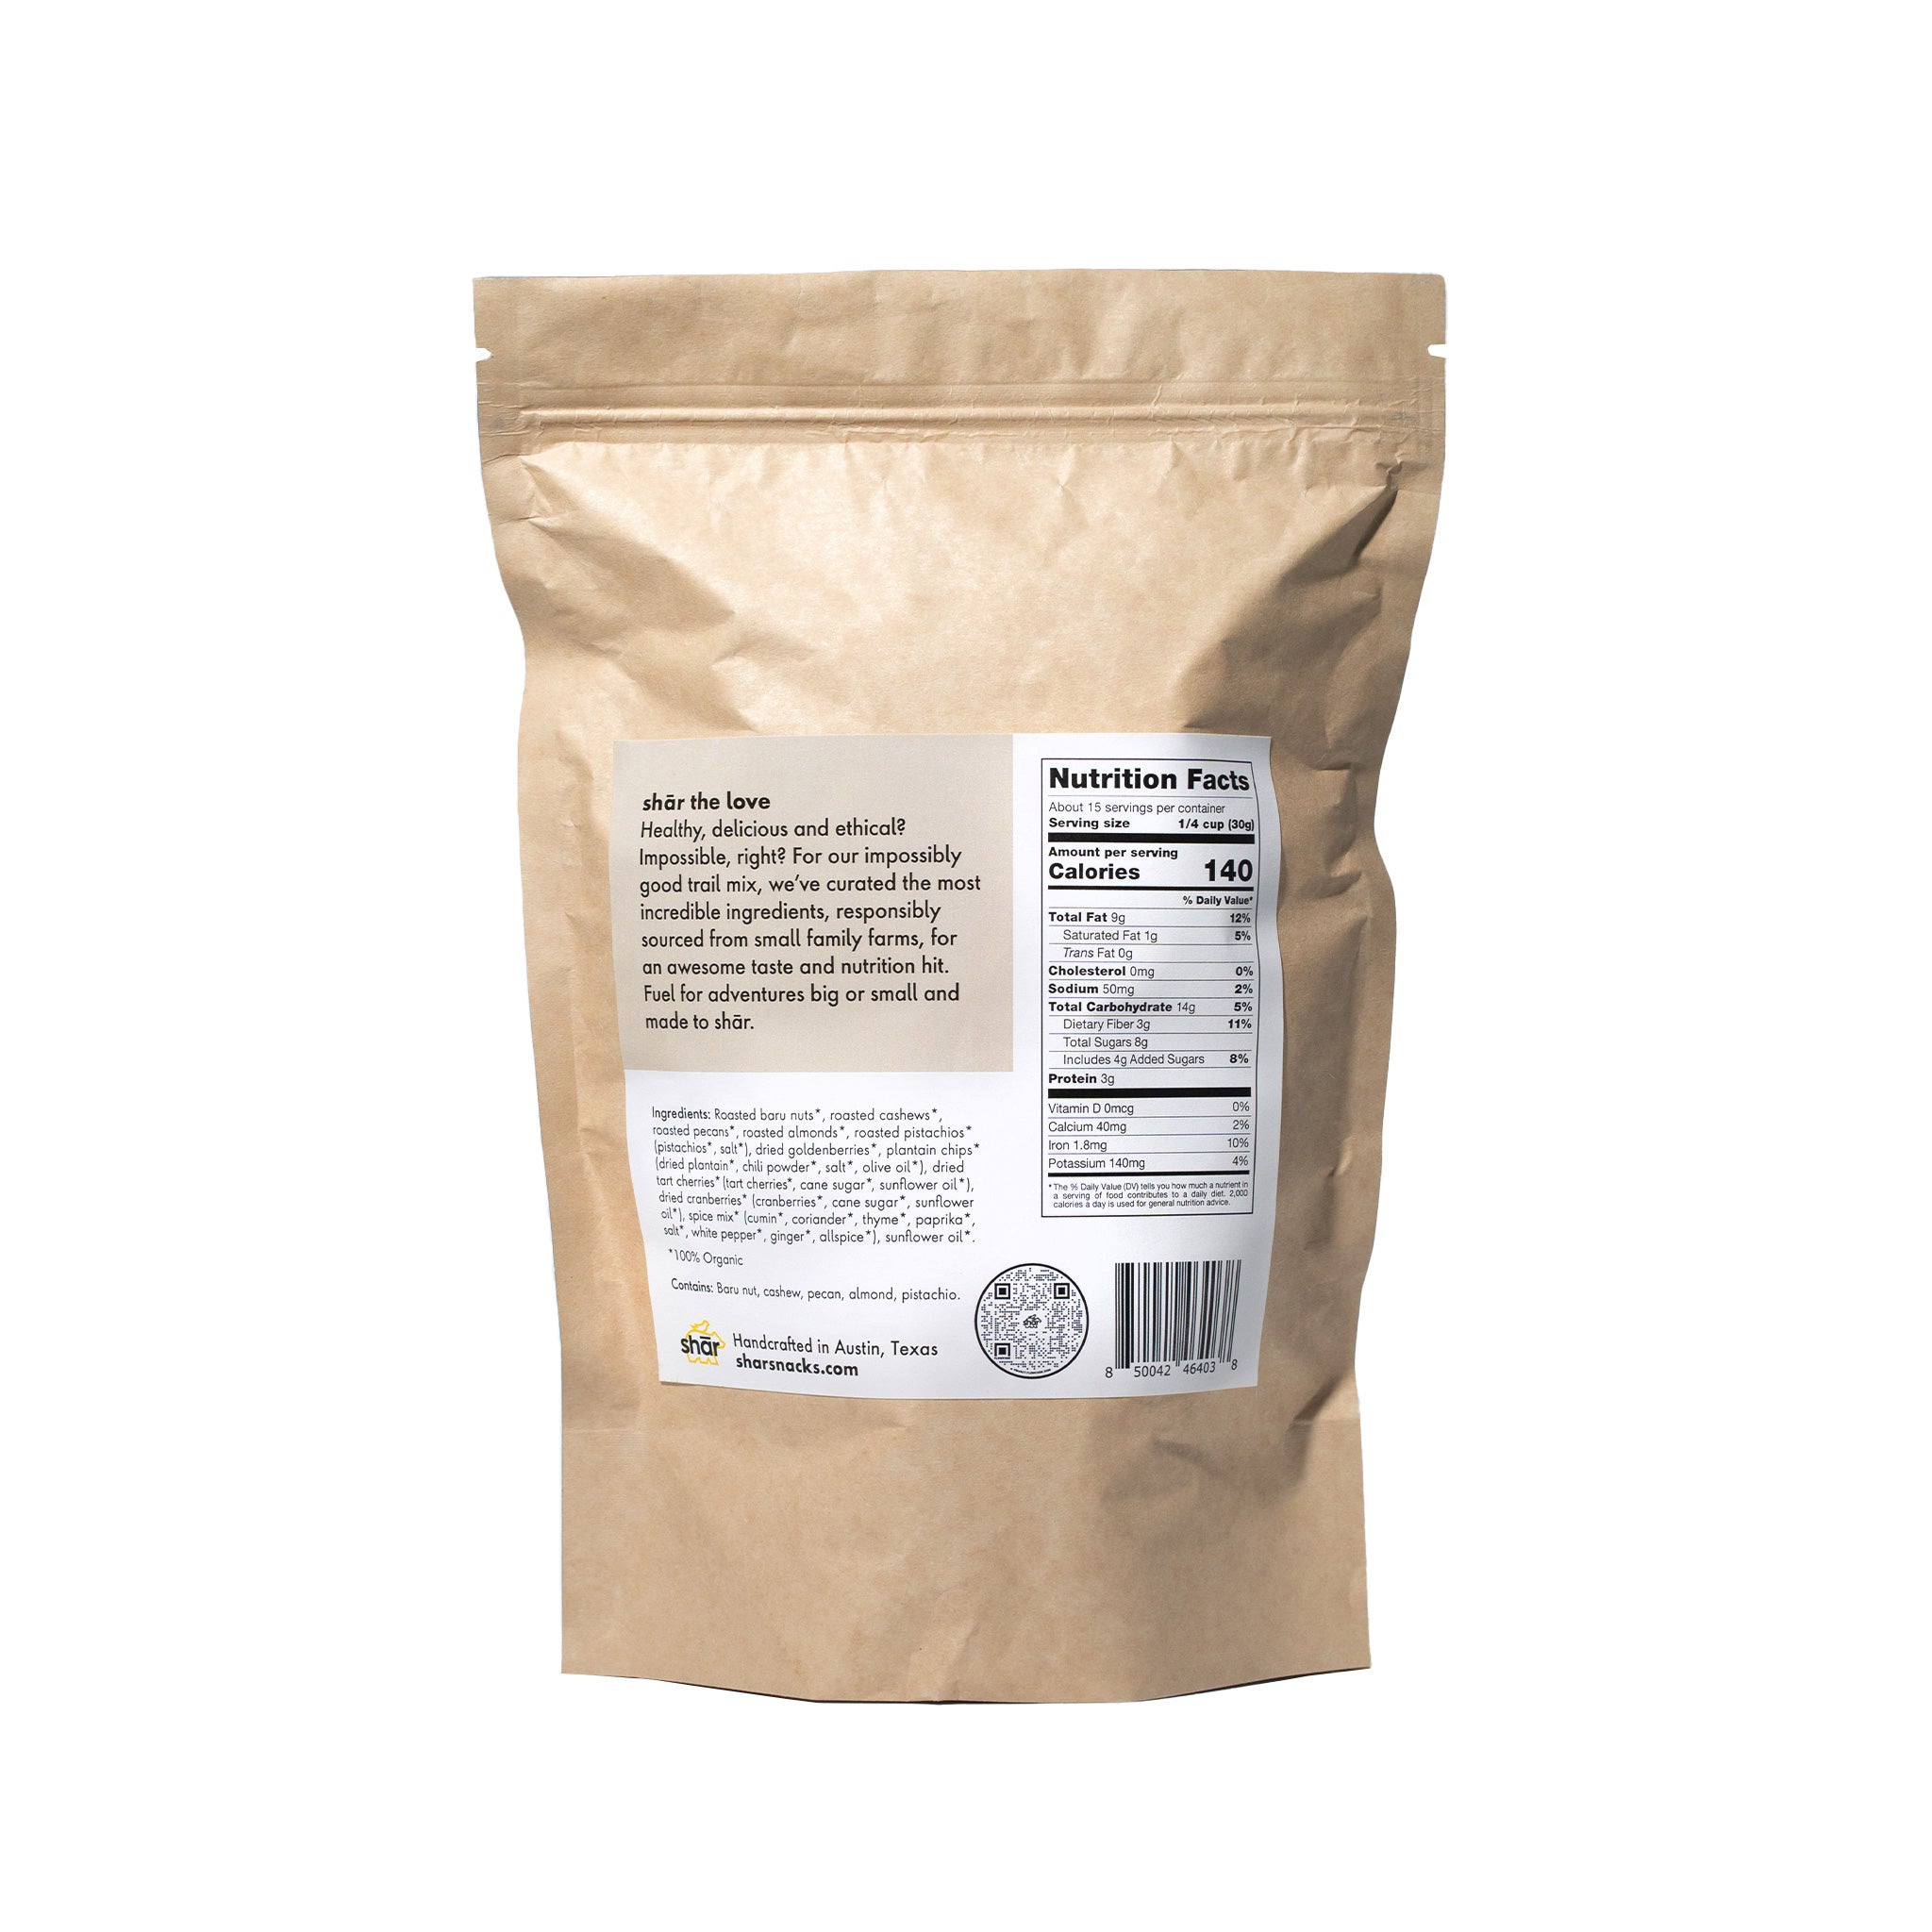 1.0 lb compostable shār bag – Savory grain-free snack